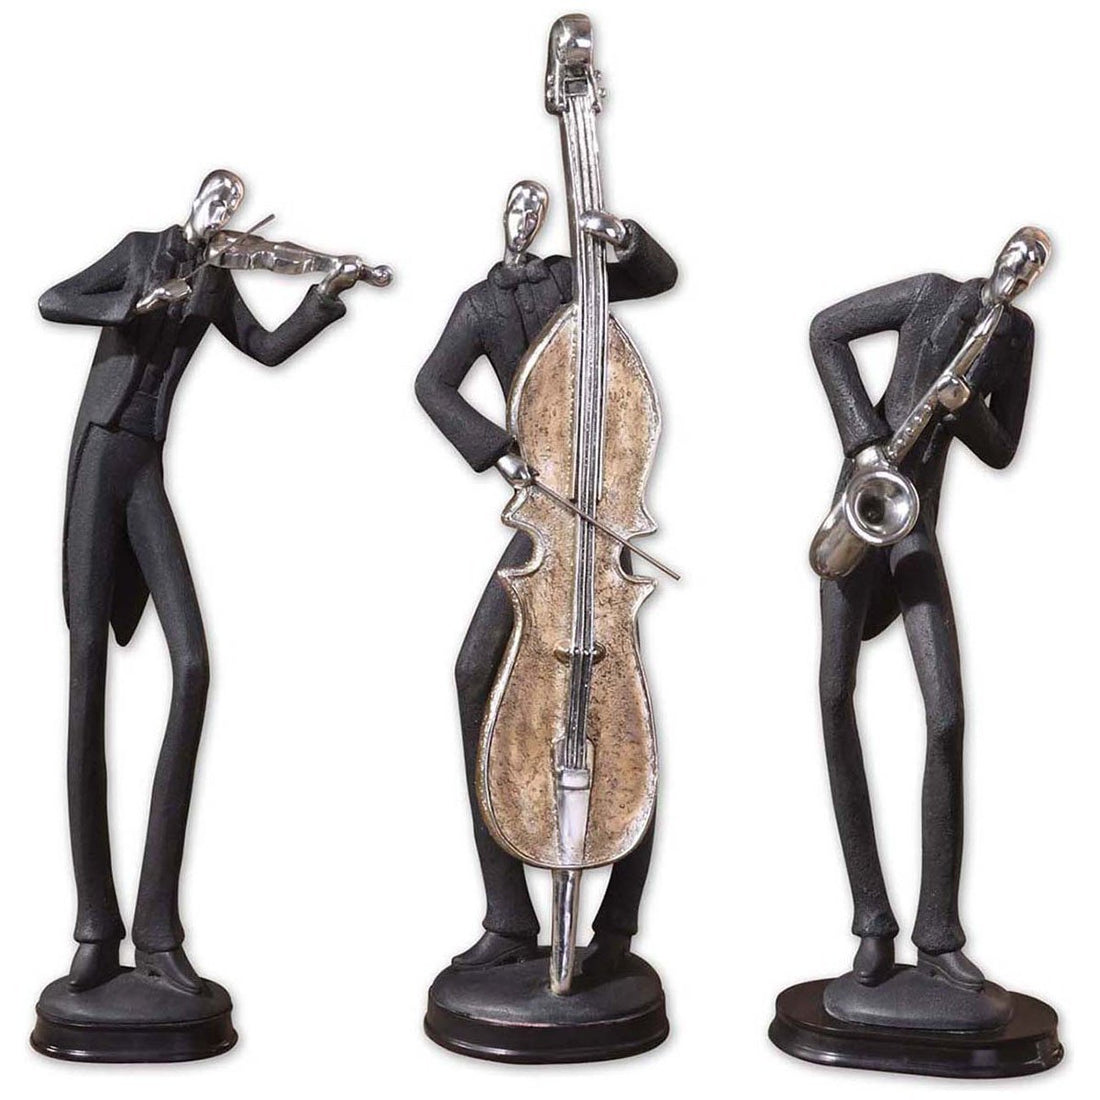 Uttermost Musicians Decorative Figurines, 3-Piece Set